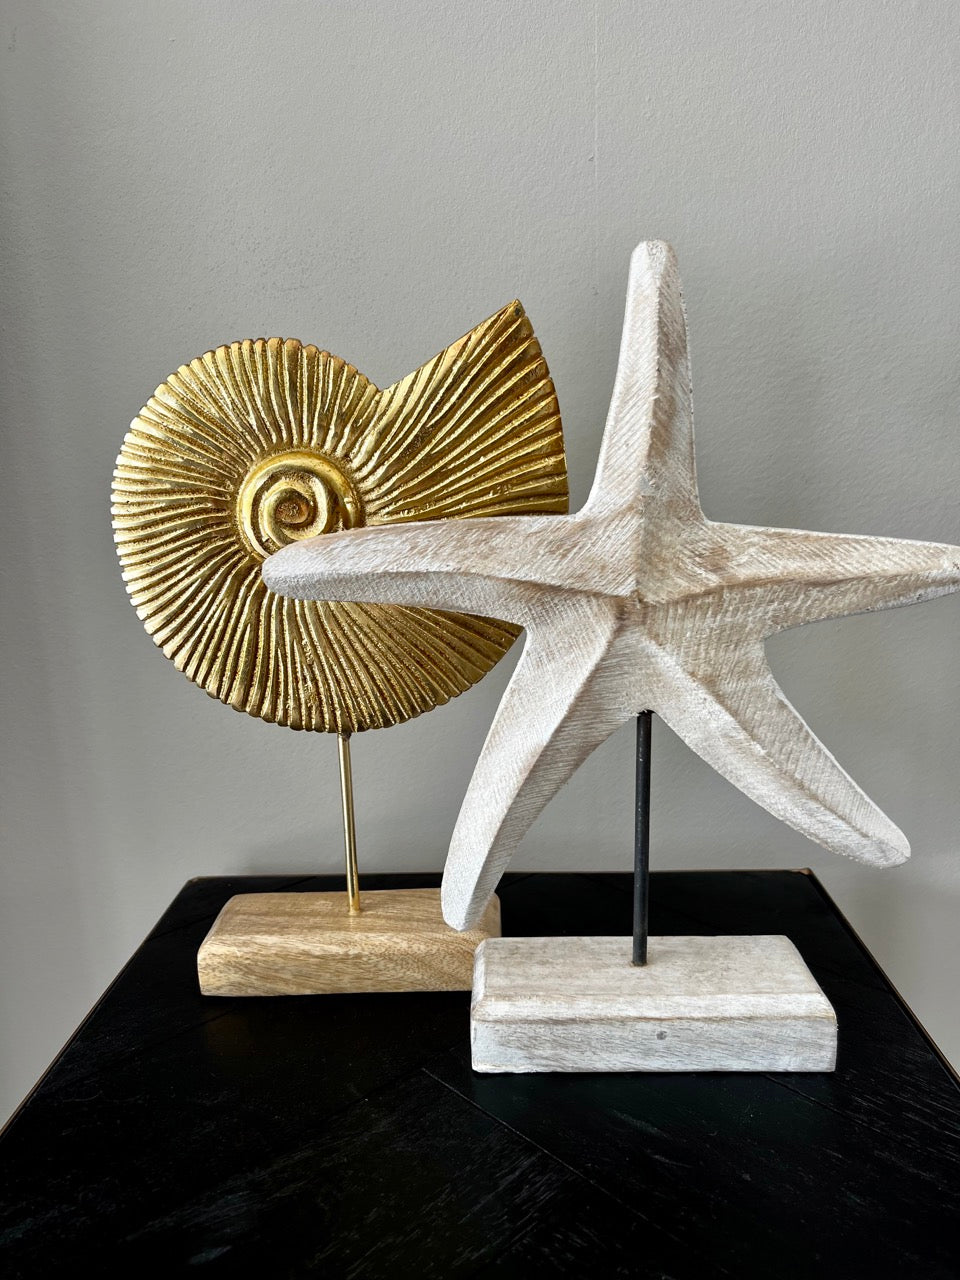 Starfish ornament - 28 cm high - cream